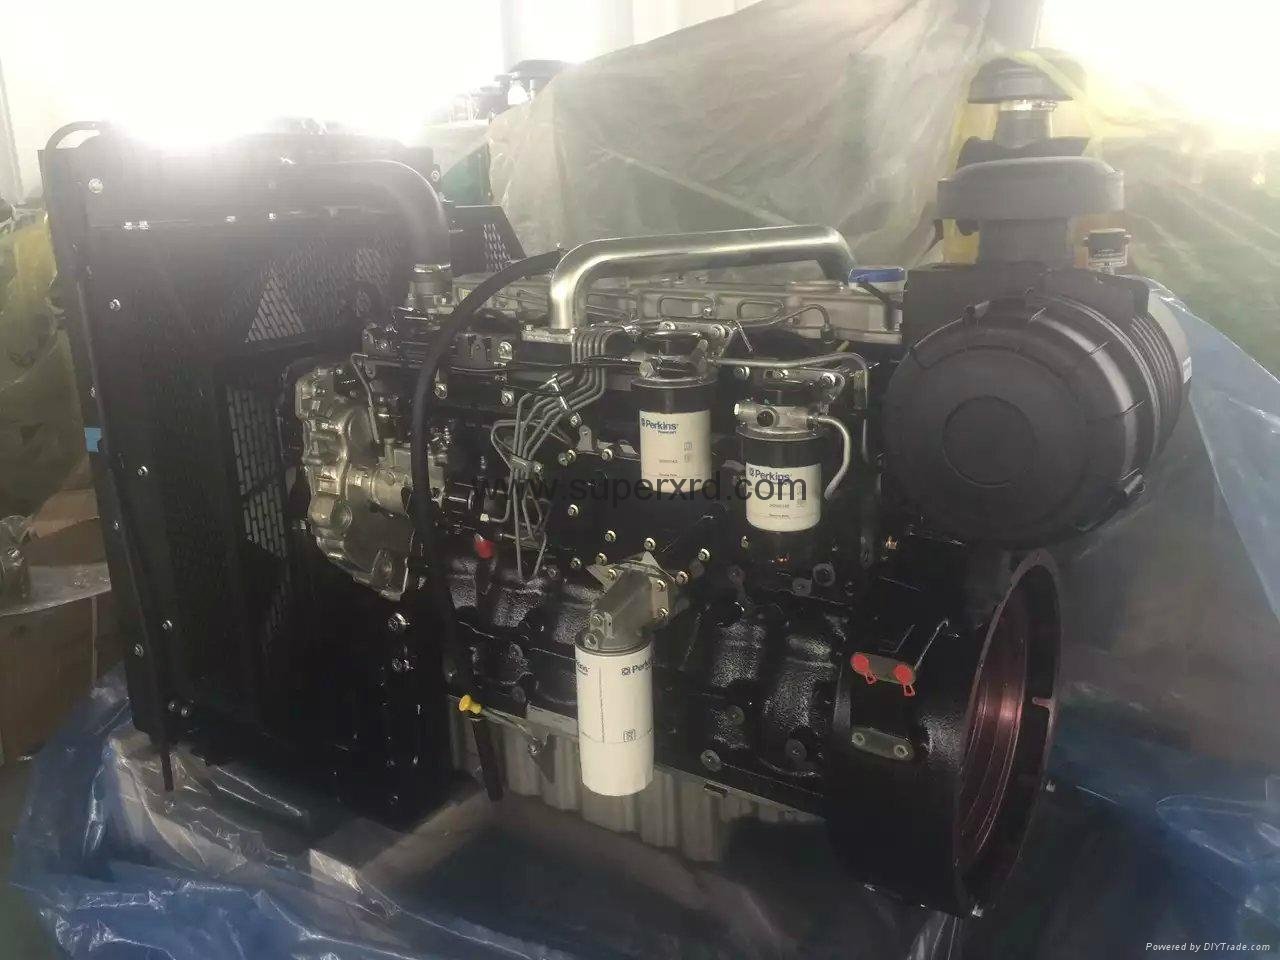  300kw  diesel generator set  AC three phase  with Perkins engine 5